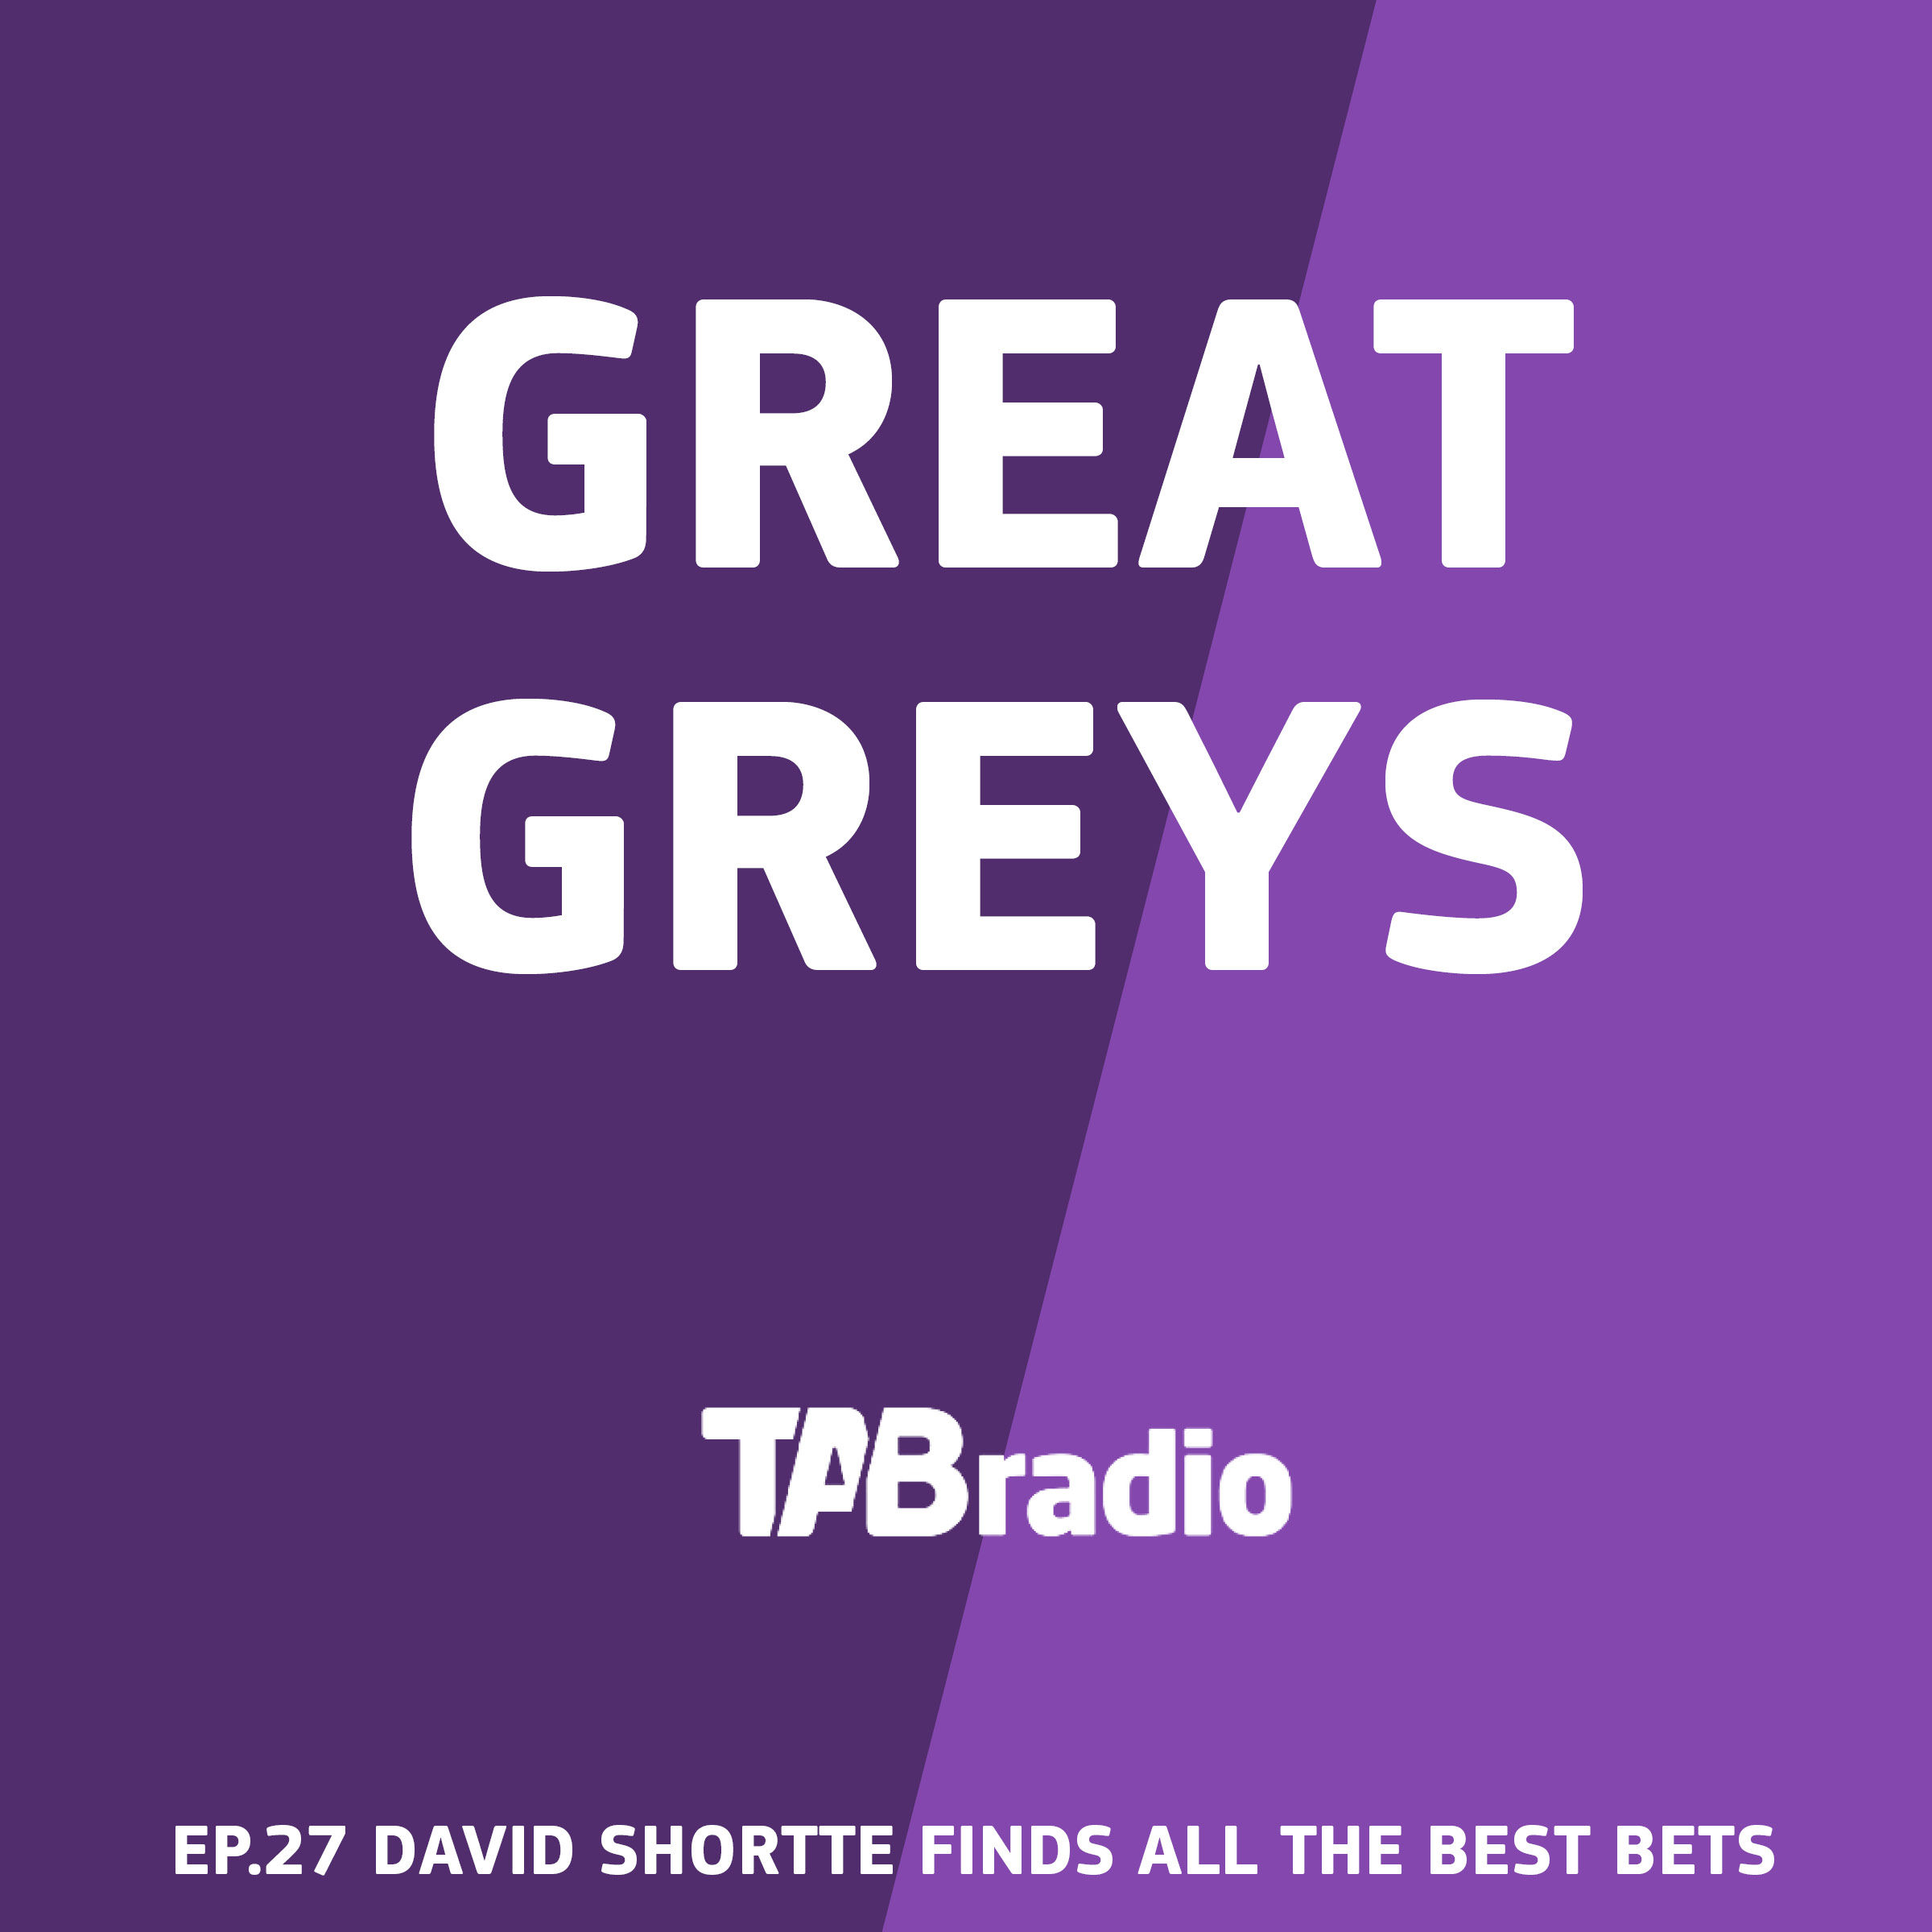 Great Greys 05-05-22. Ep27